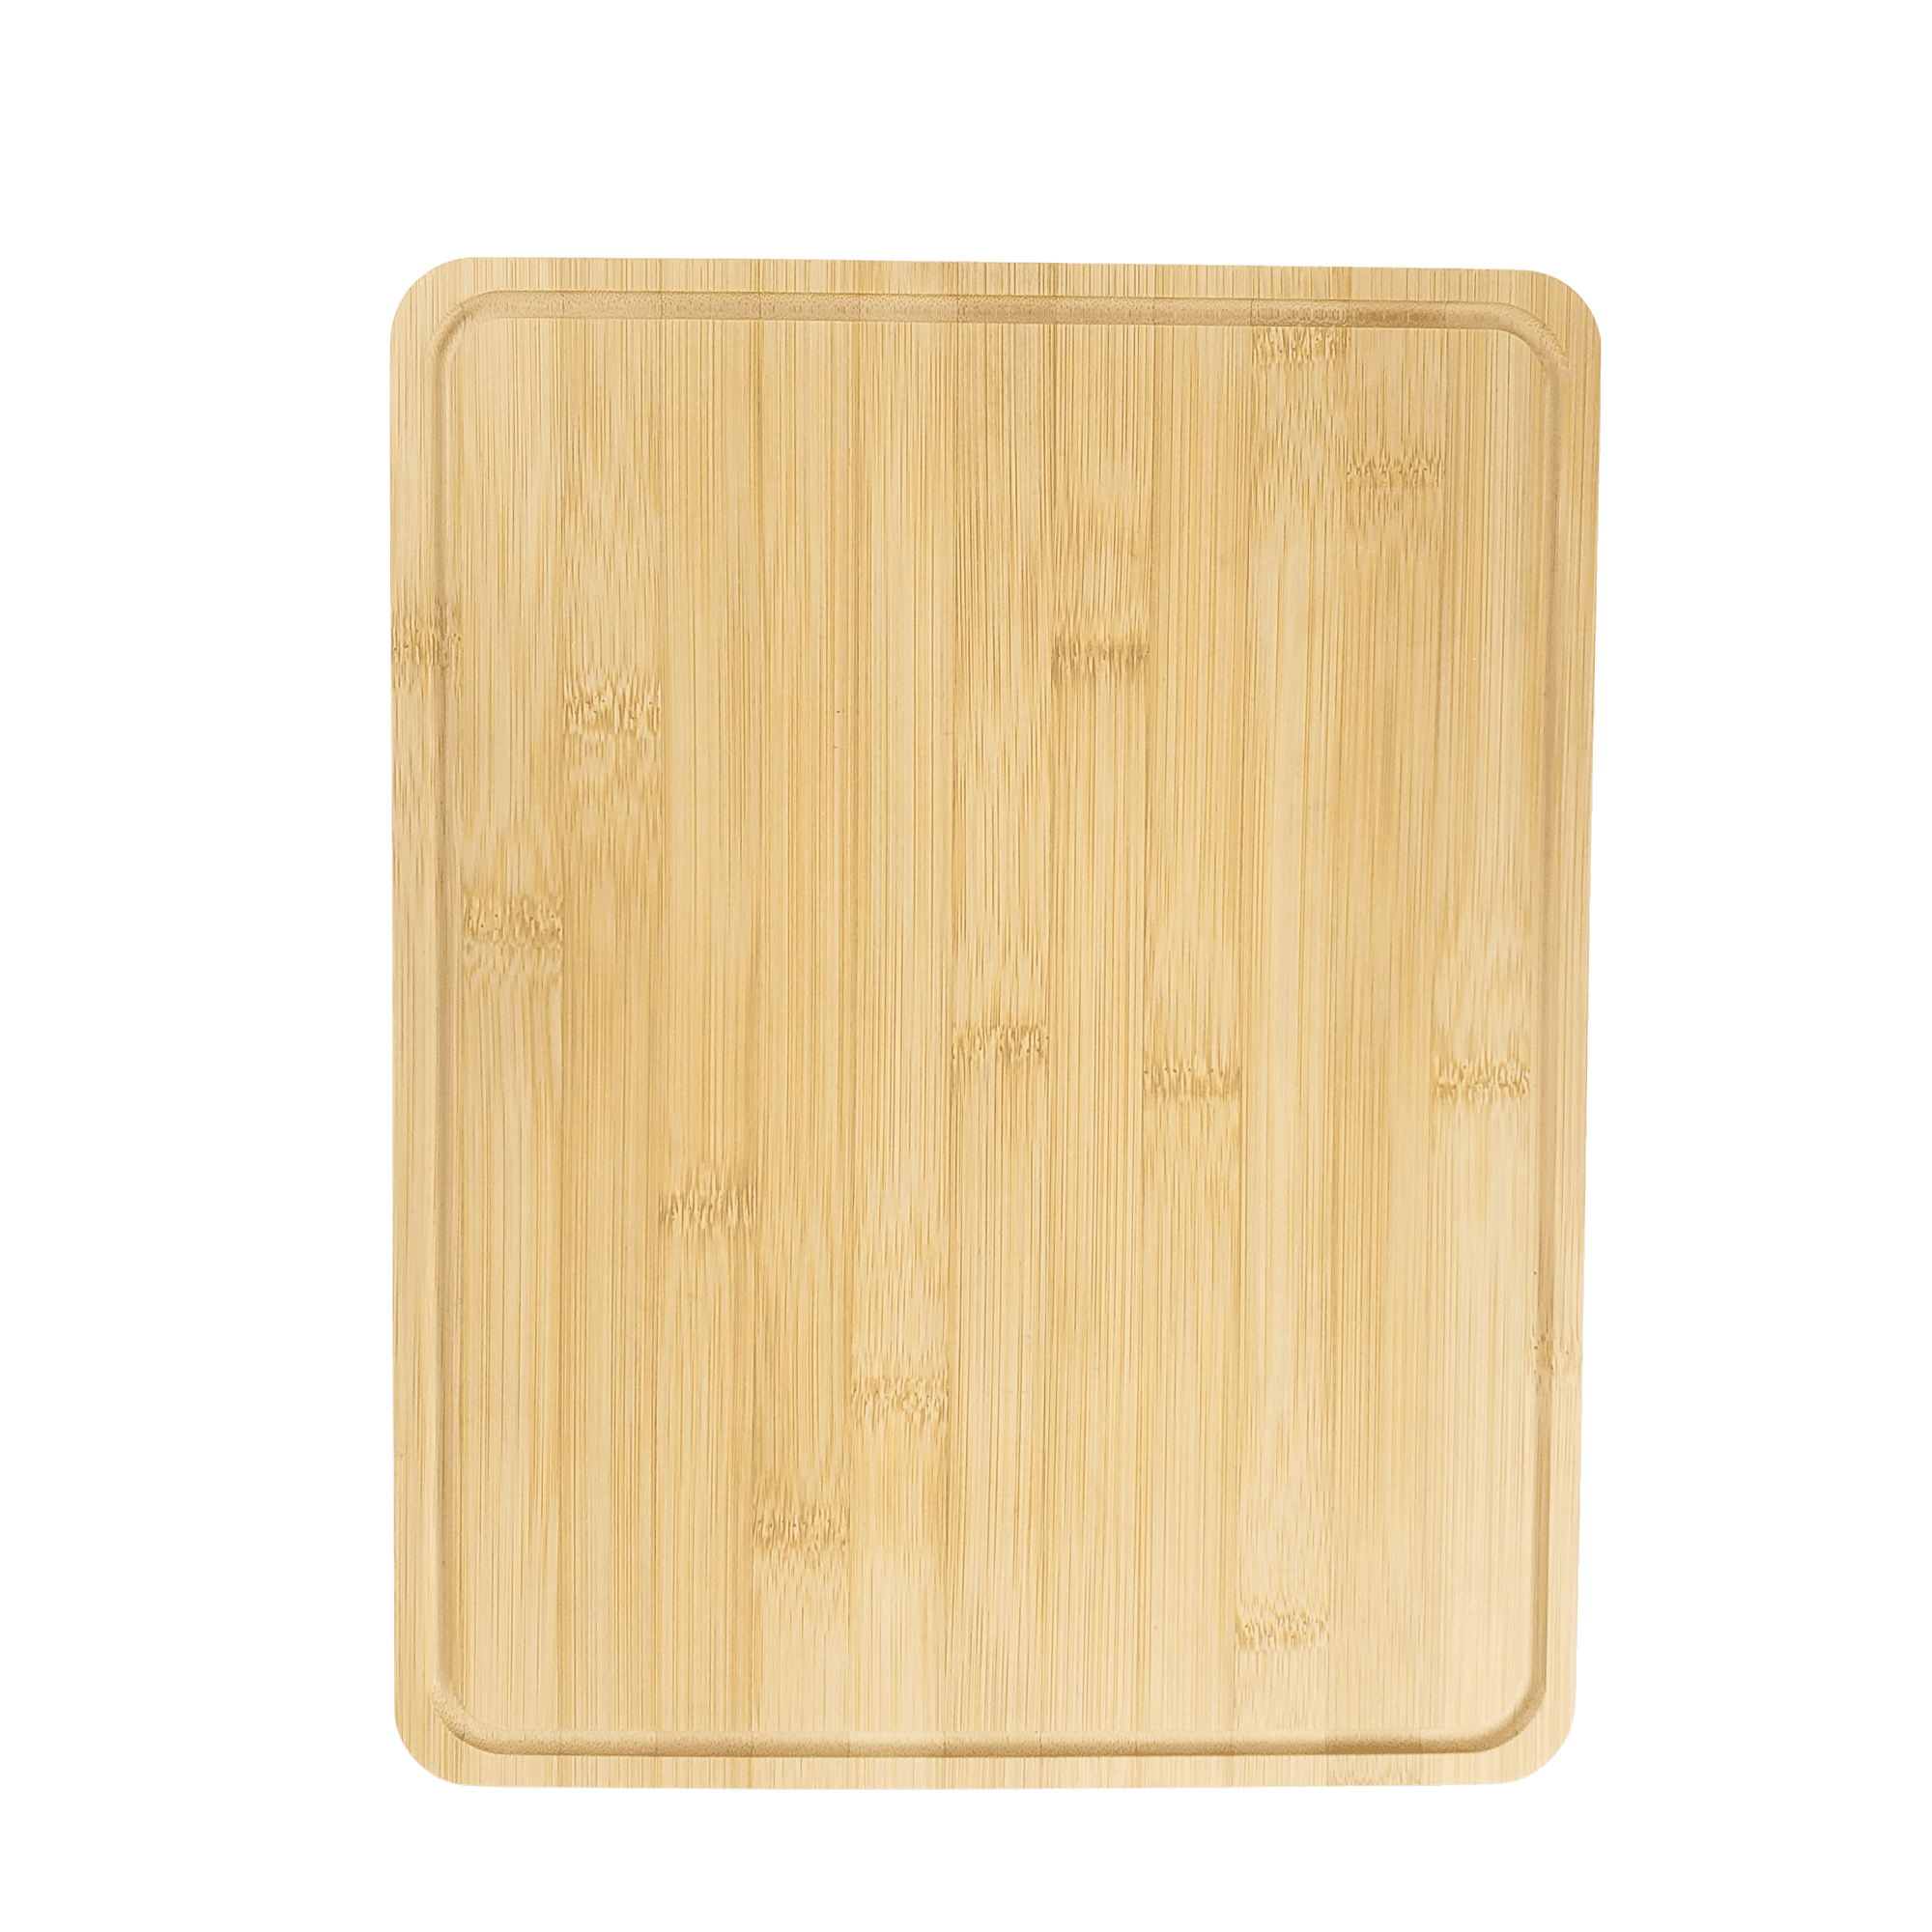 $10 bamboo cutting boards! : r/aldi